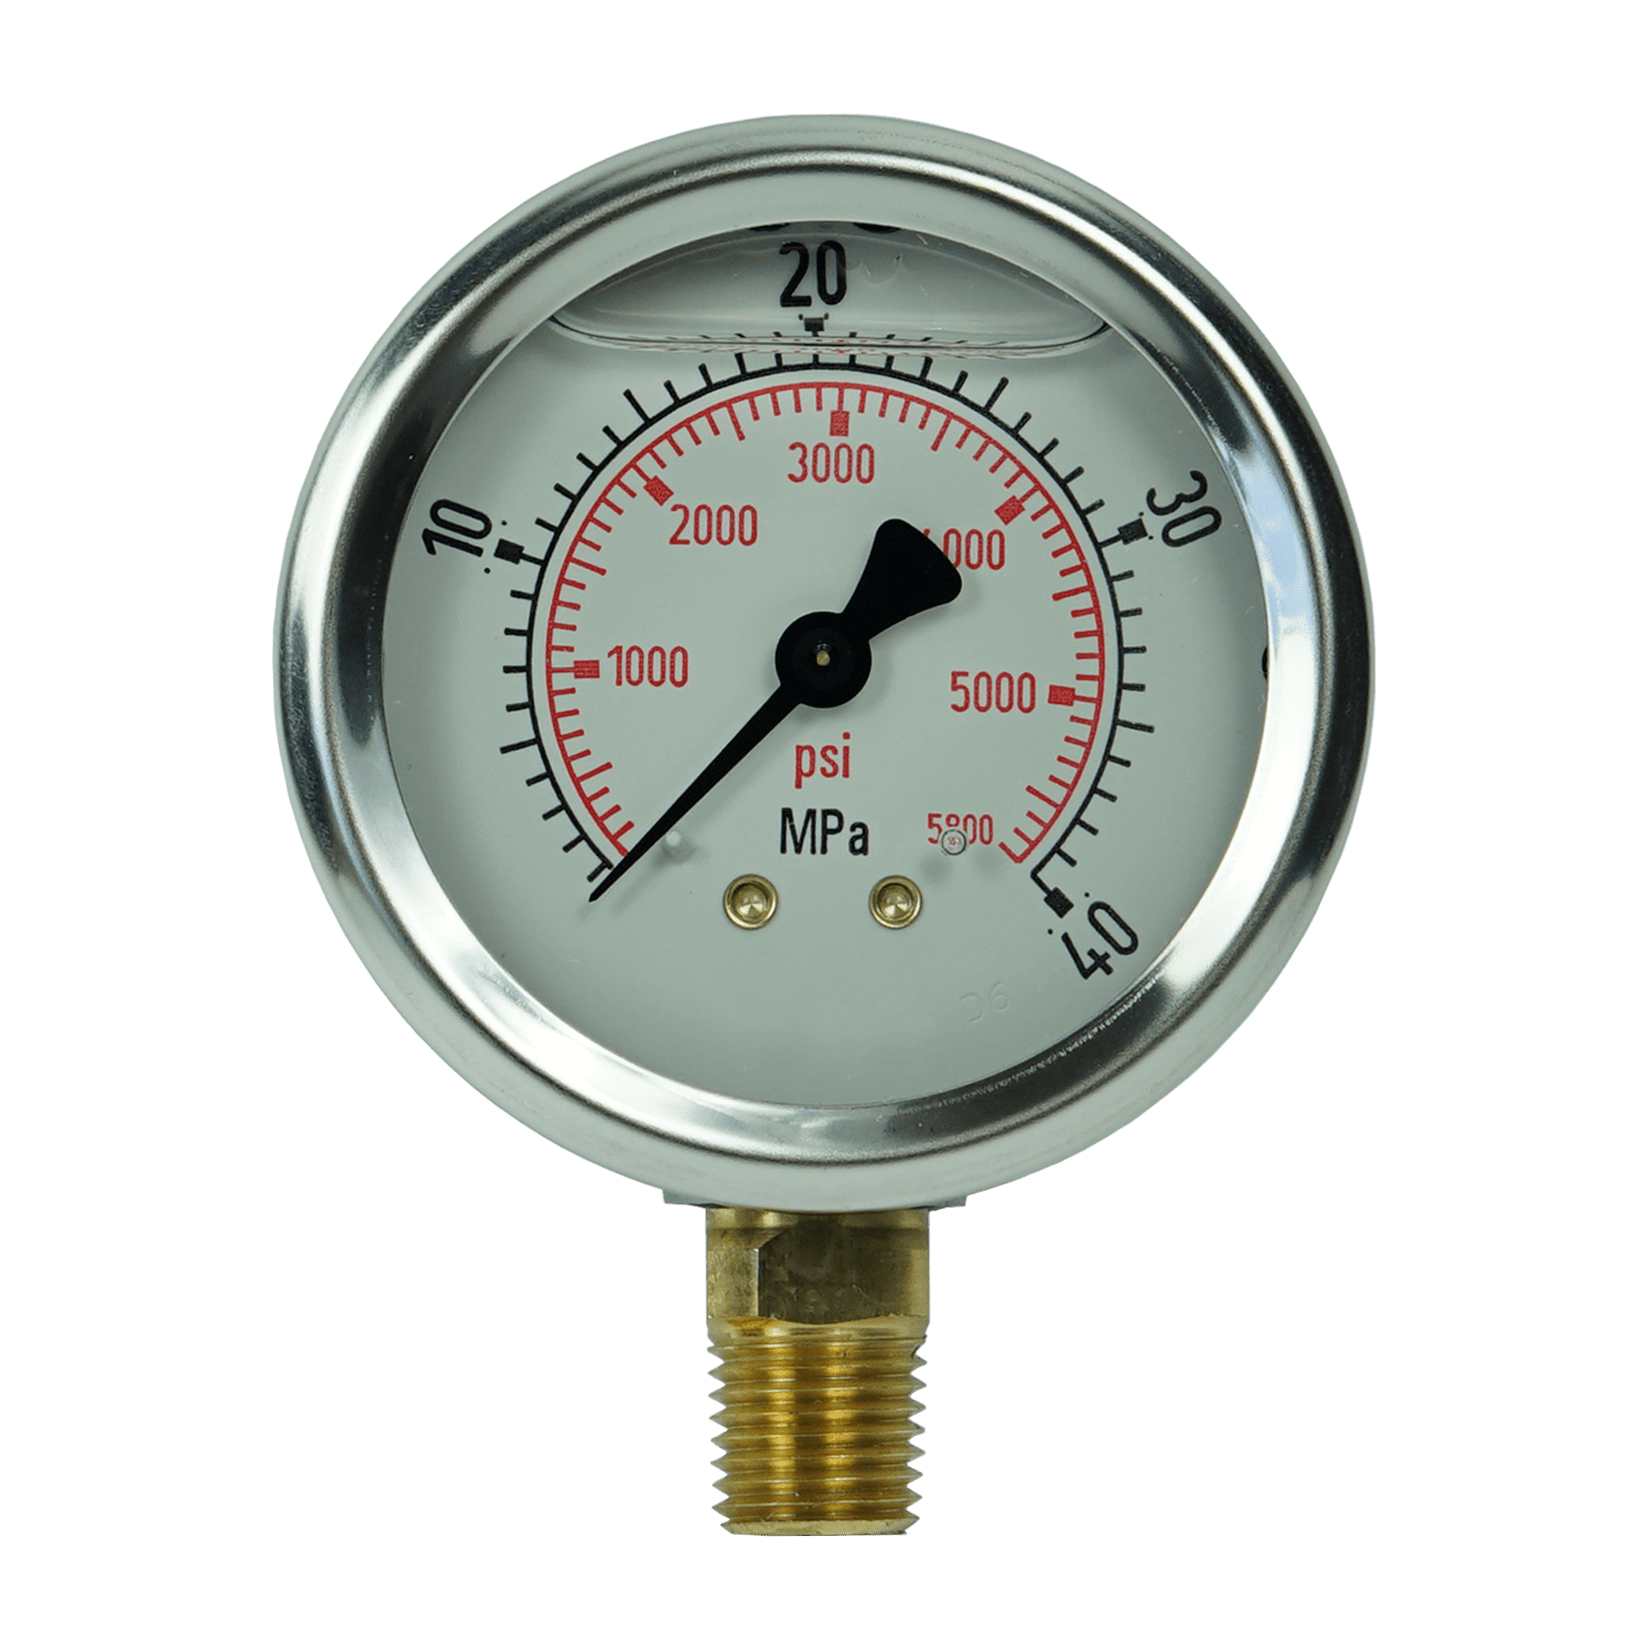 Pressure Test Products - Pressure Gauge - 40 MPa - Hydracheck